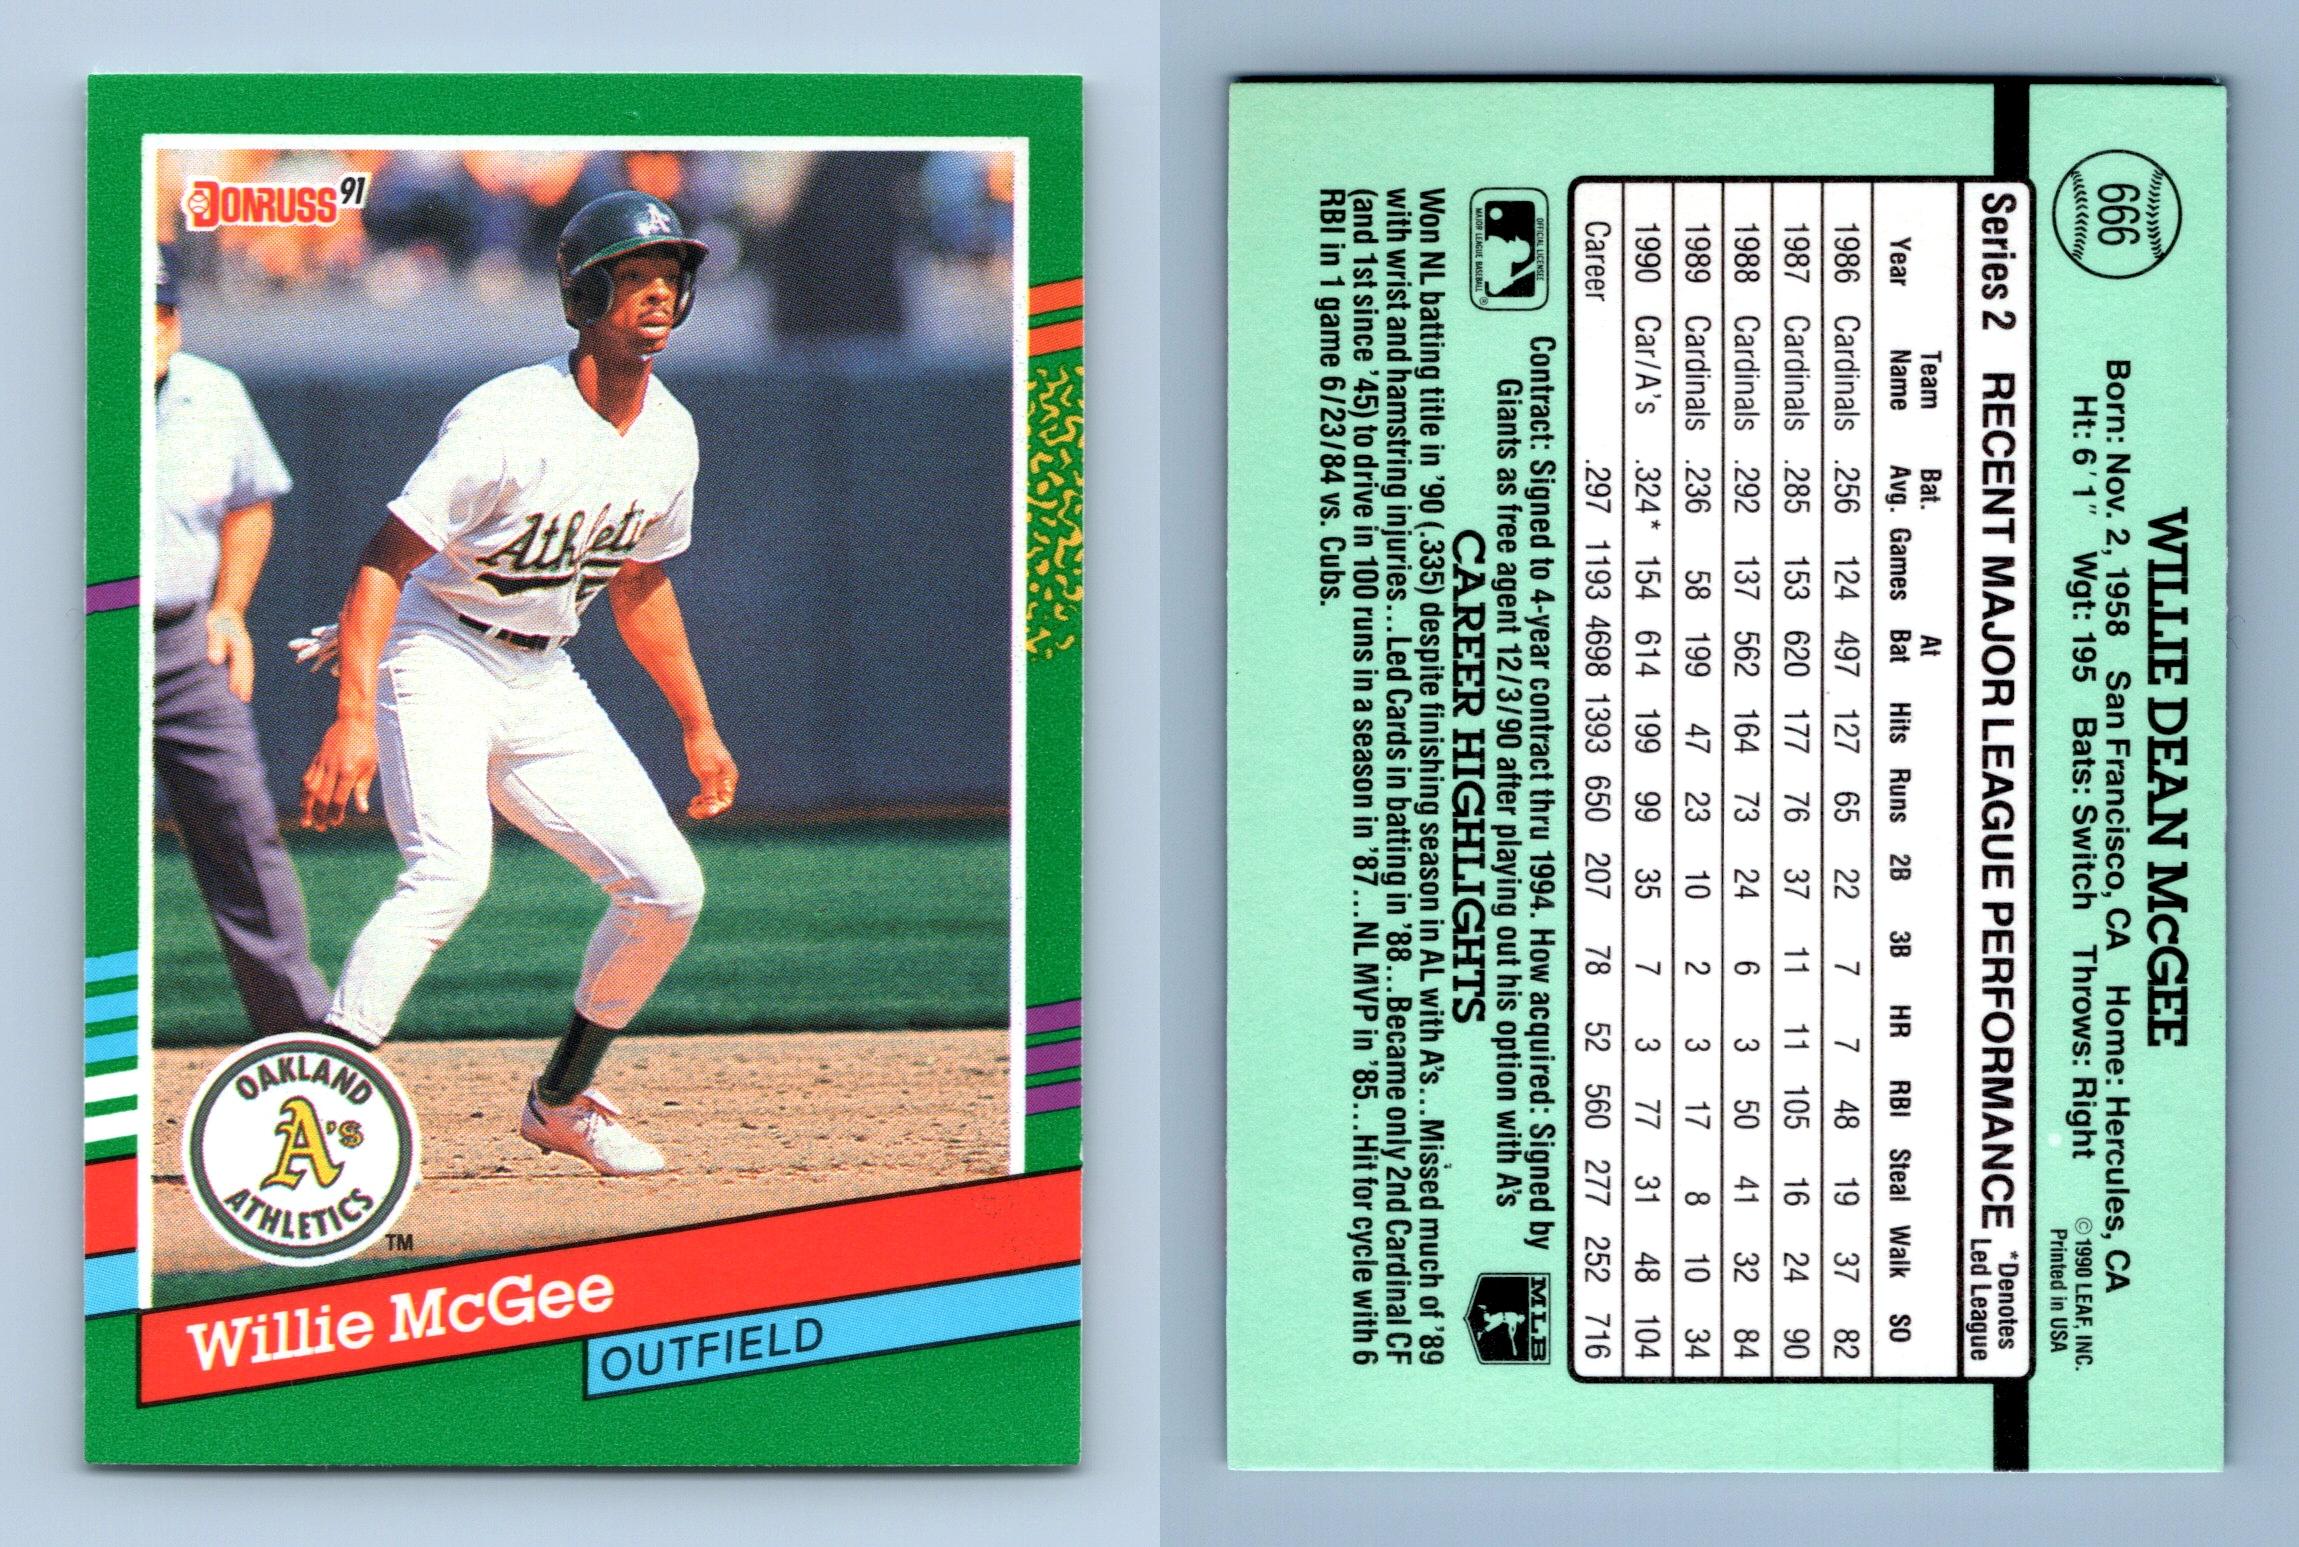  1991 Score Baseball Card #482 Alvin Davis